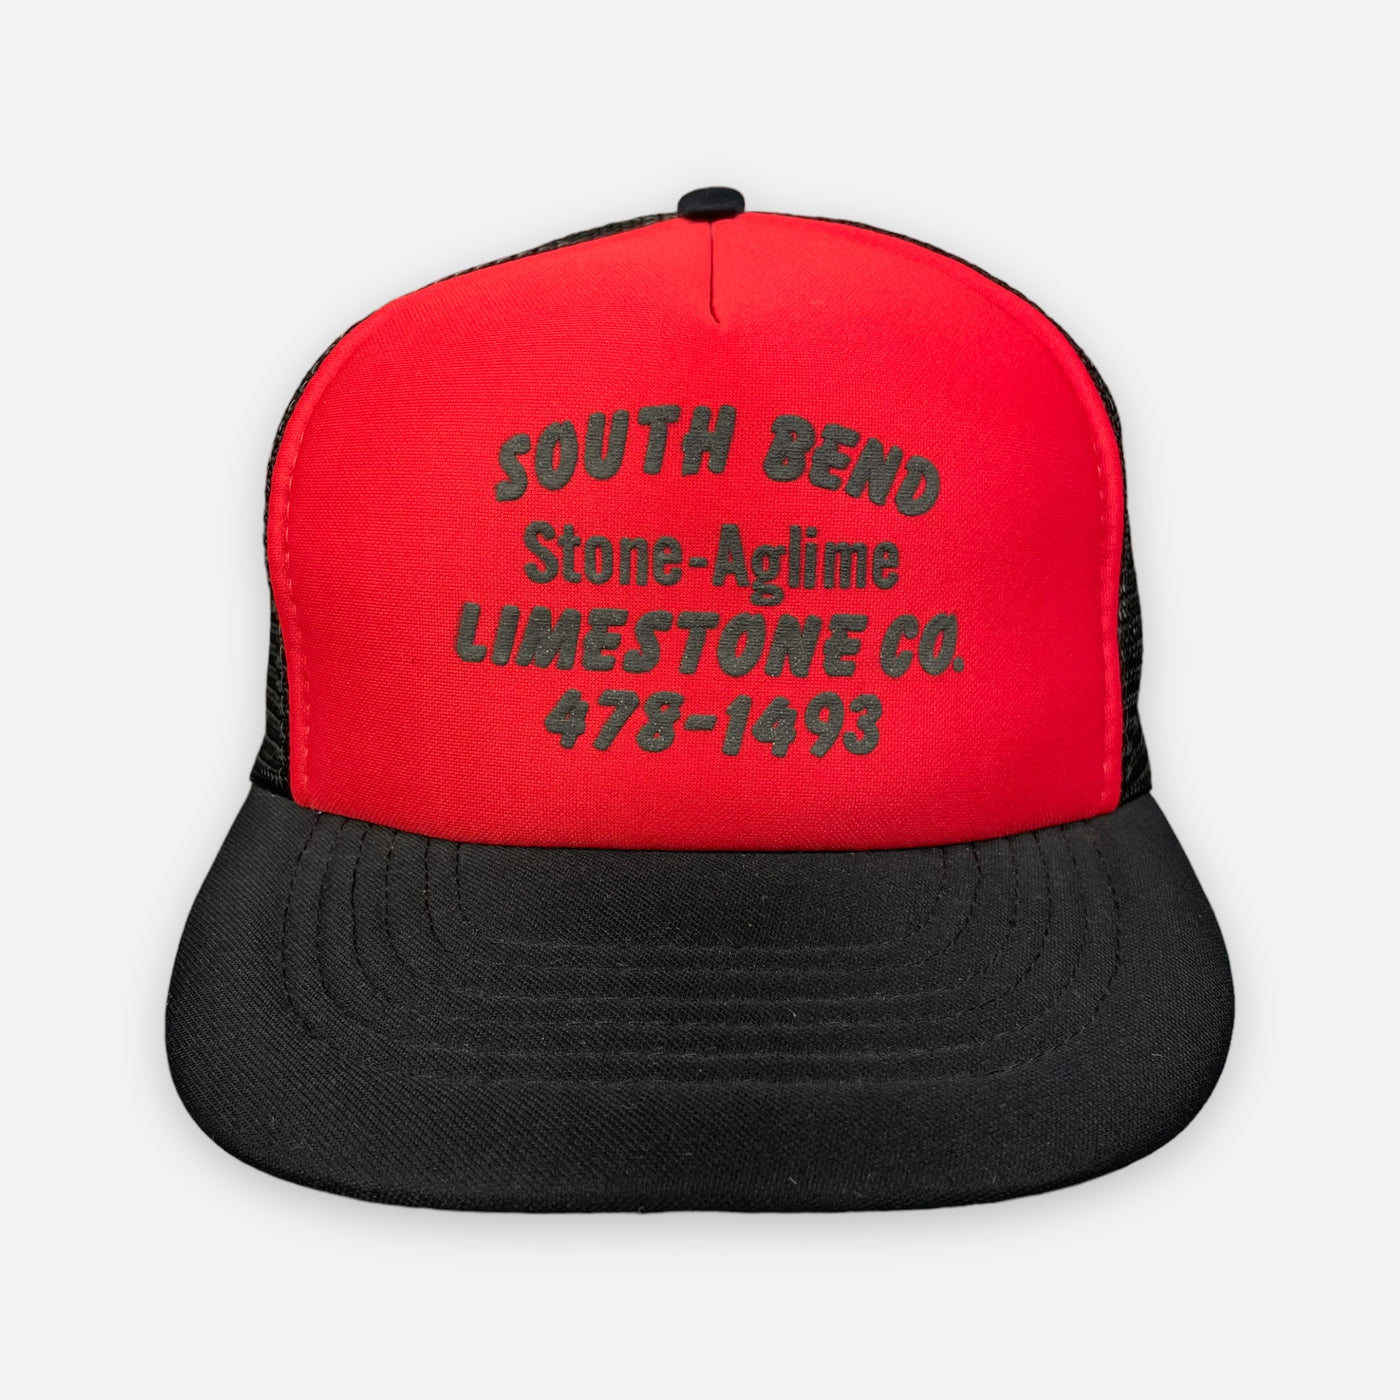 EARLY 90S SOUTH BEND TRUCKER CAP